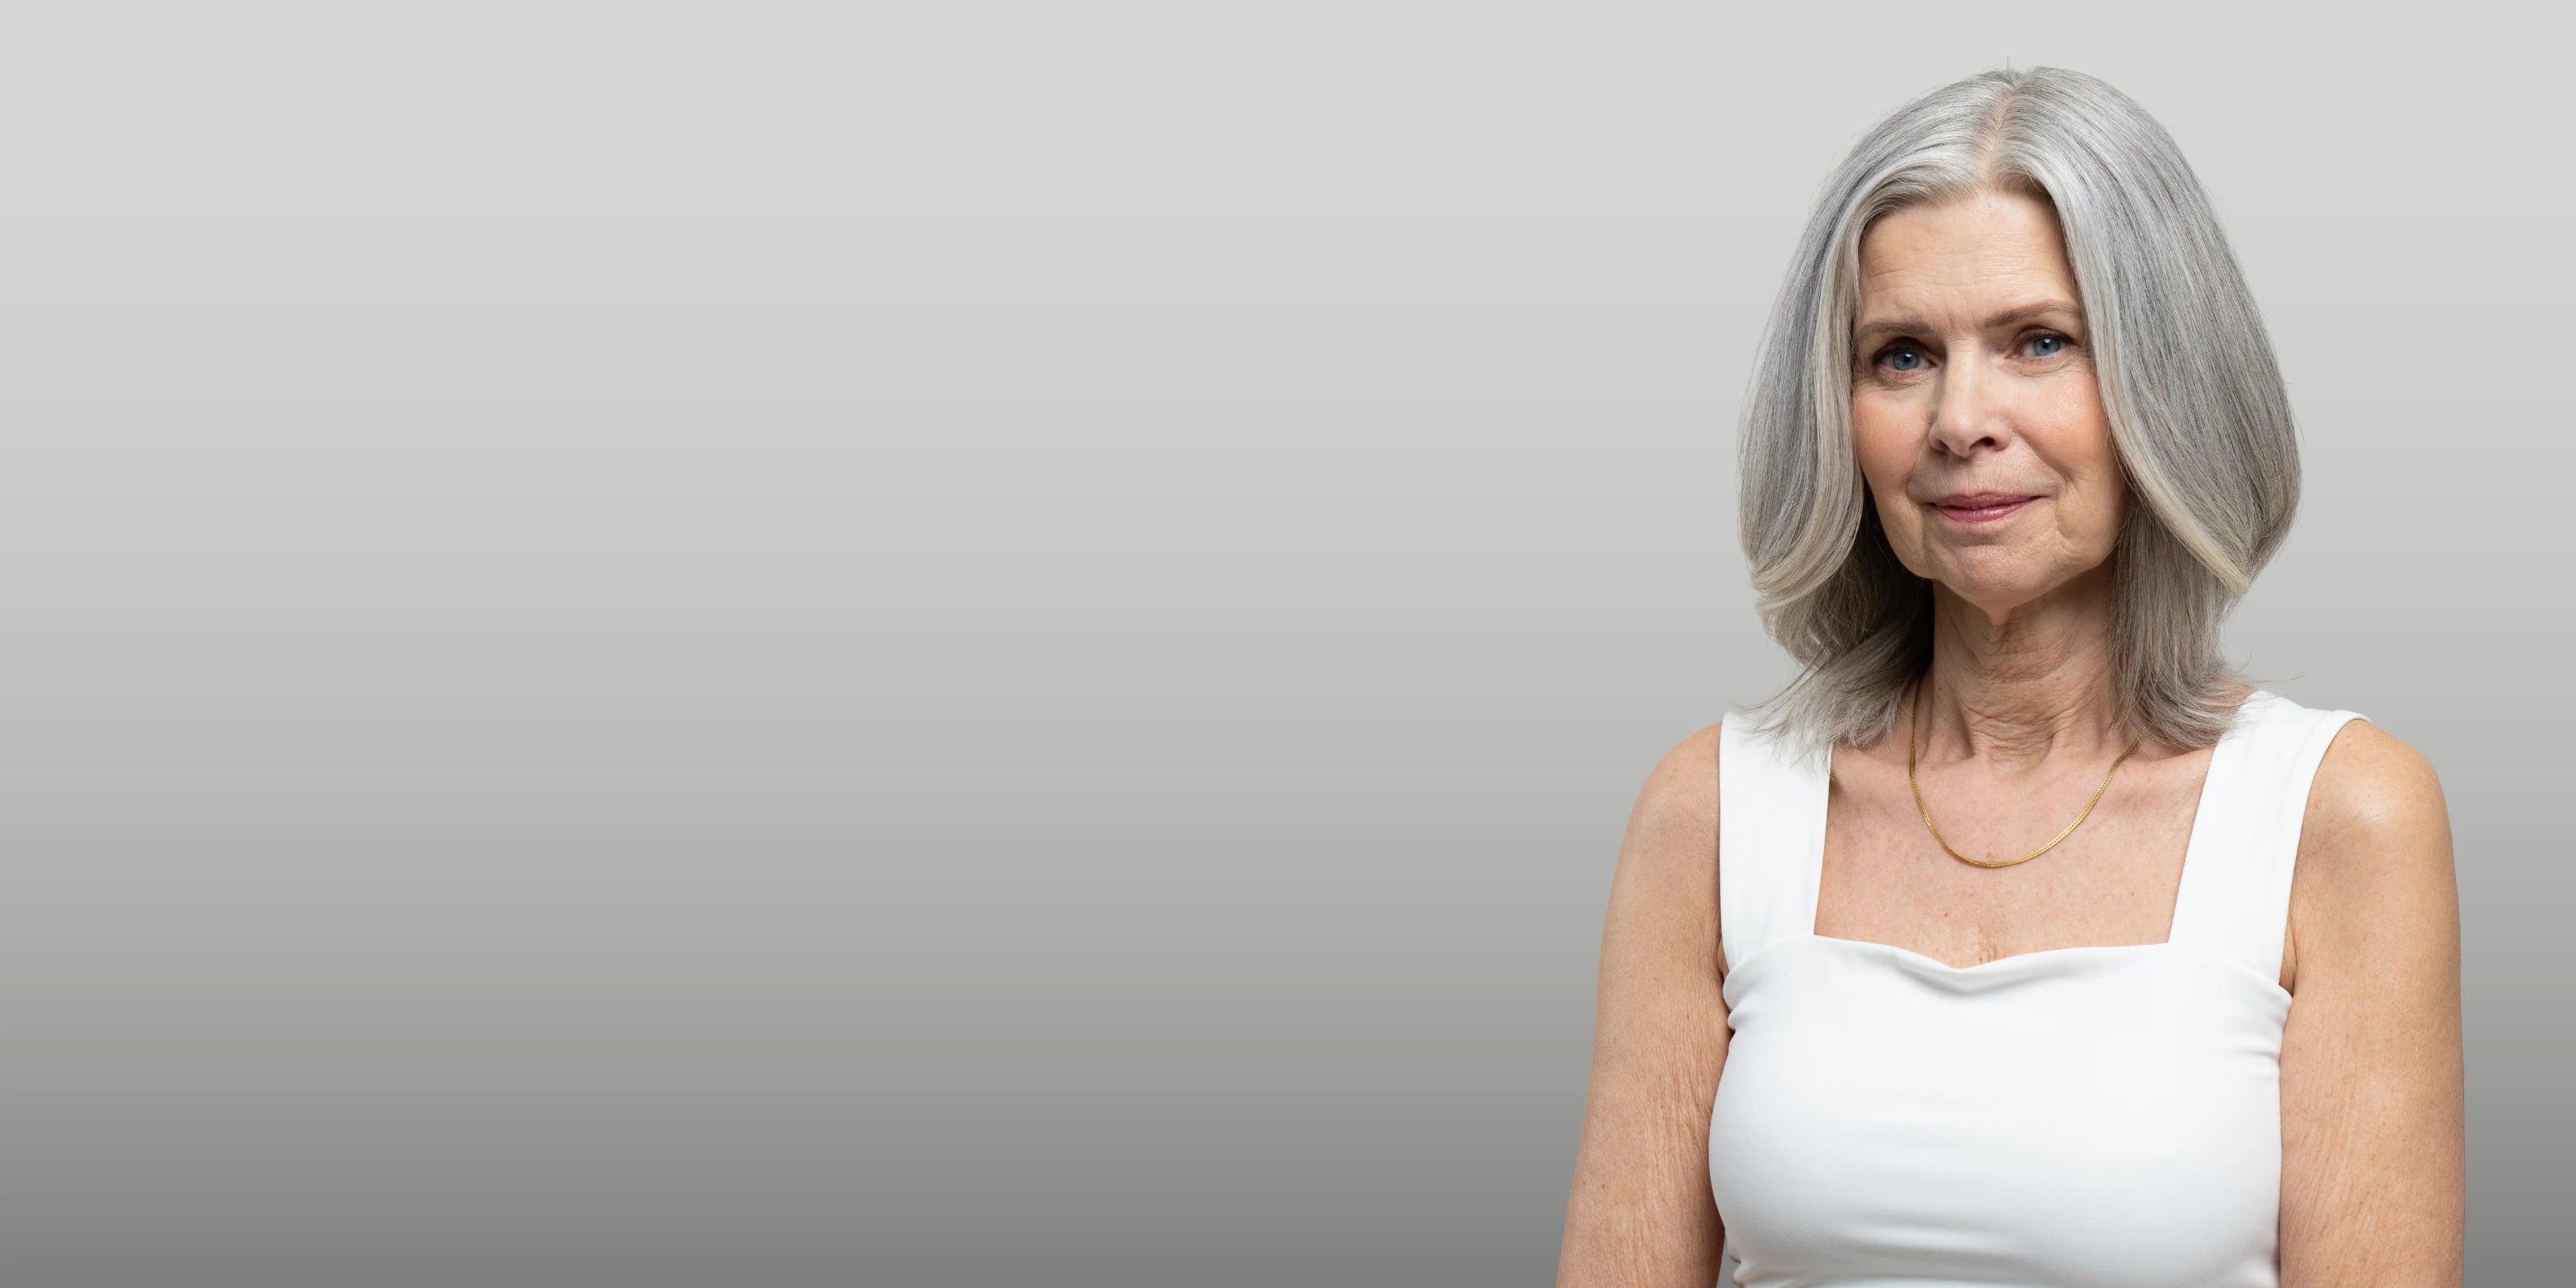 Older women with grey hair experiencing menopause hair loss.